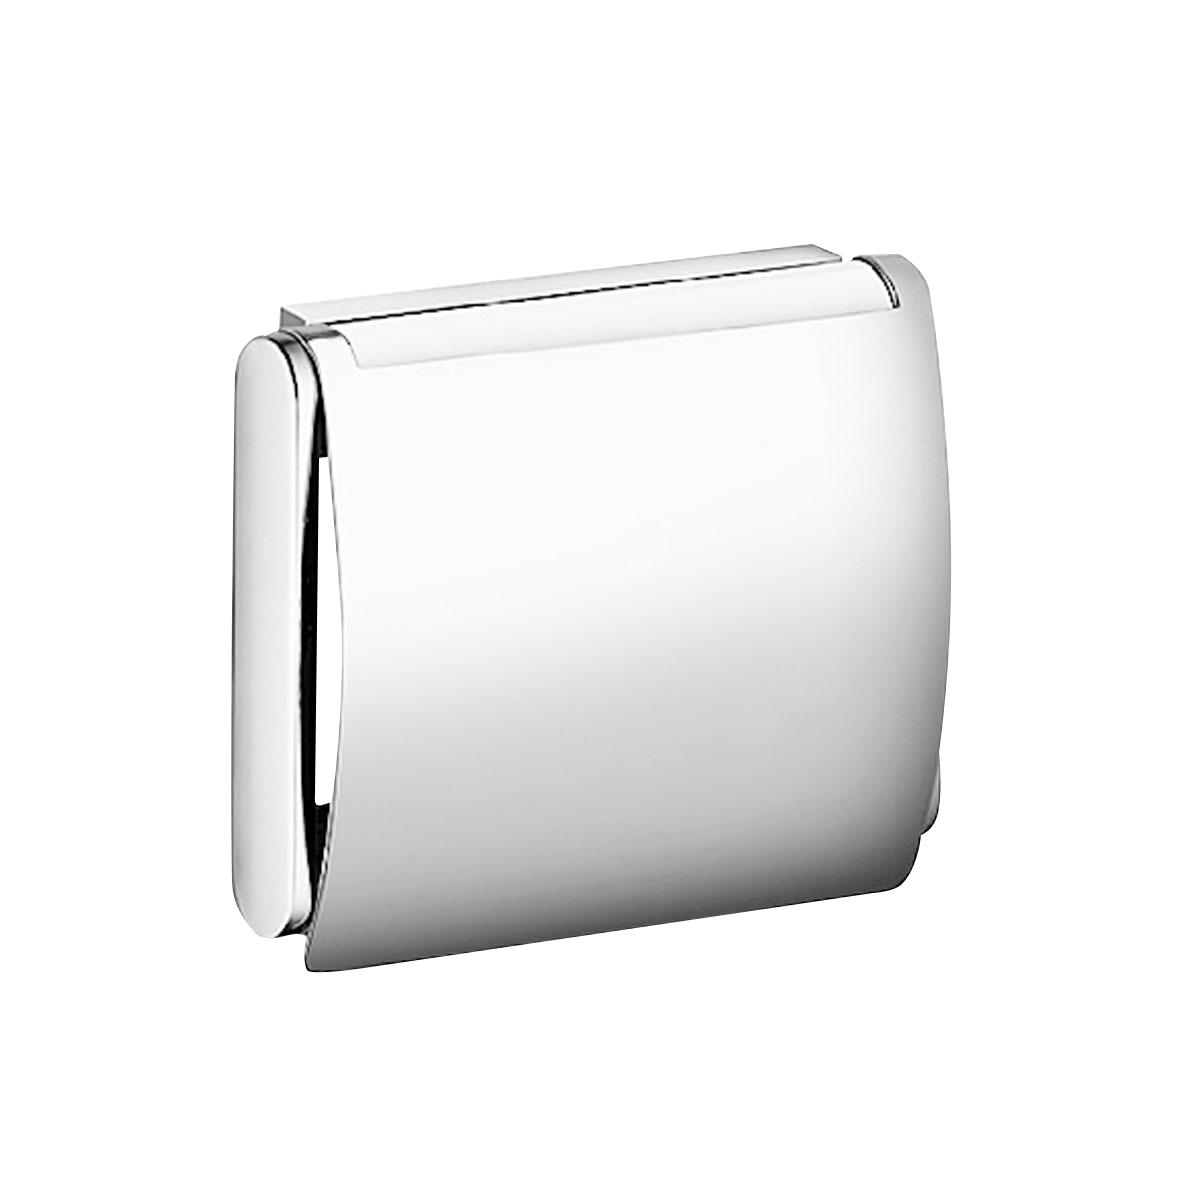 Aliseo - Toilettenpapierhalter Architecto 151 x 108 x 53 mm